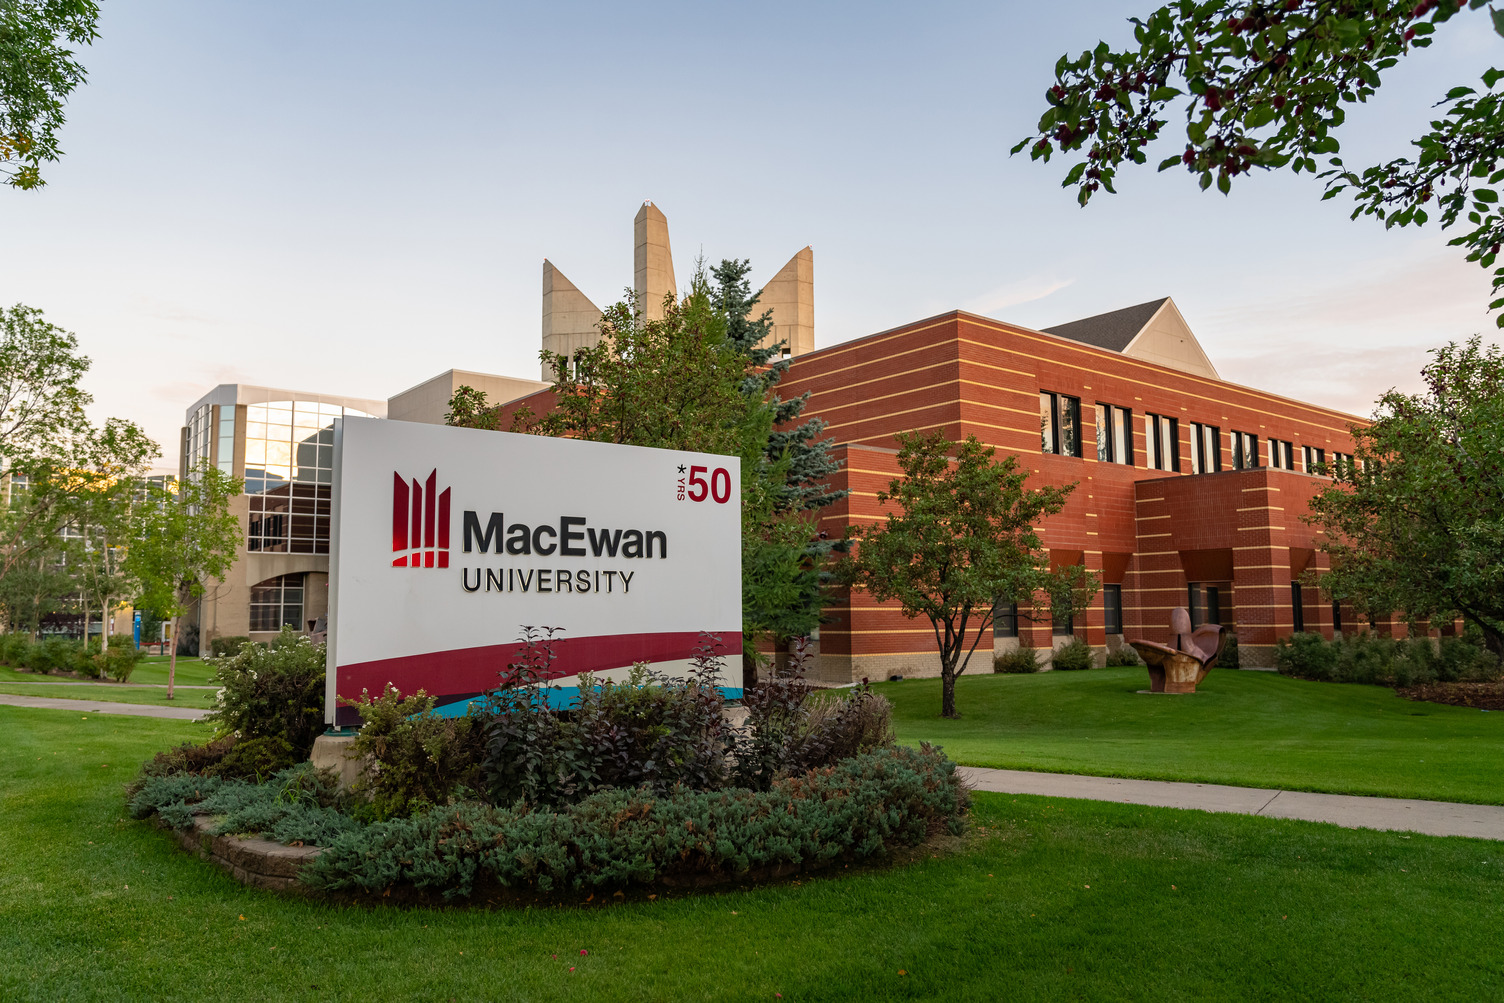 Image of MacEwan University east side sign